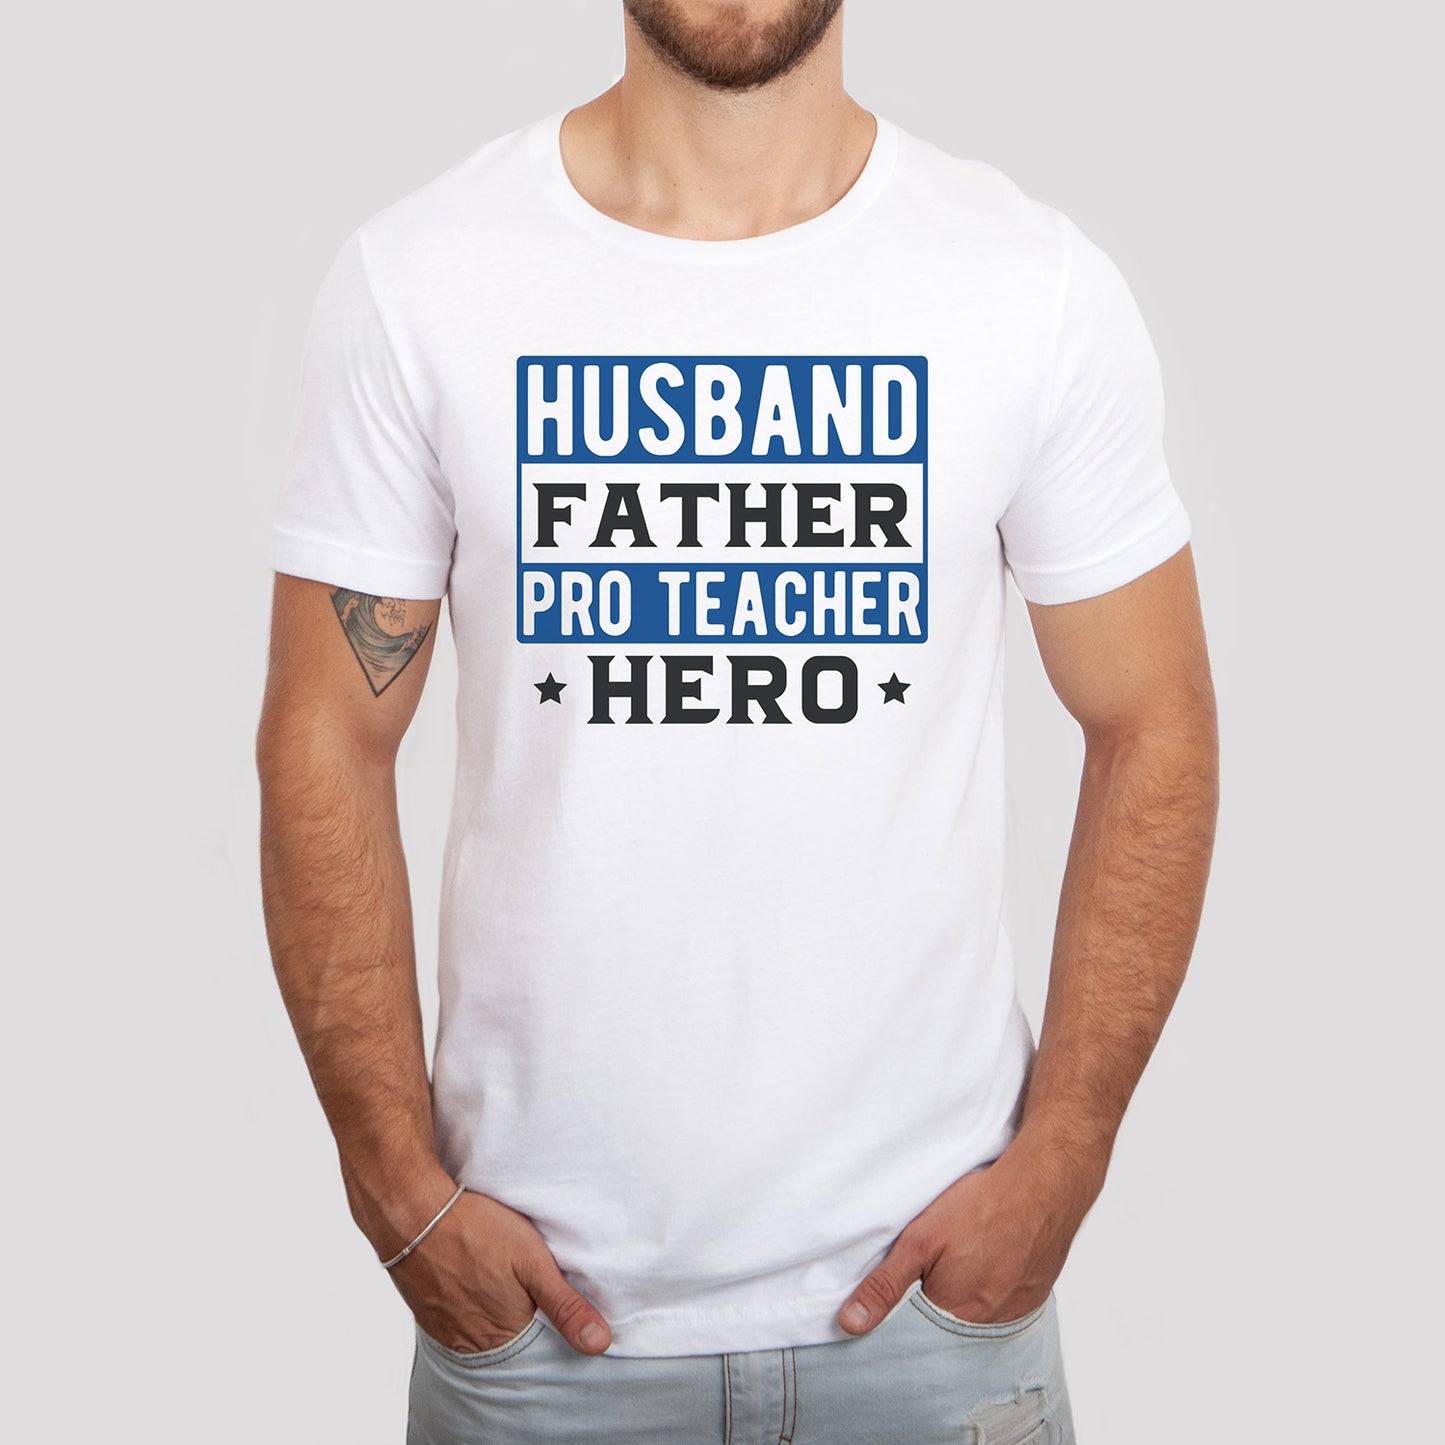 "Husband Father Pro Teacher Hero" Graphic